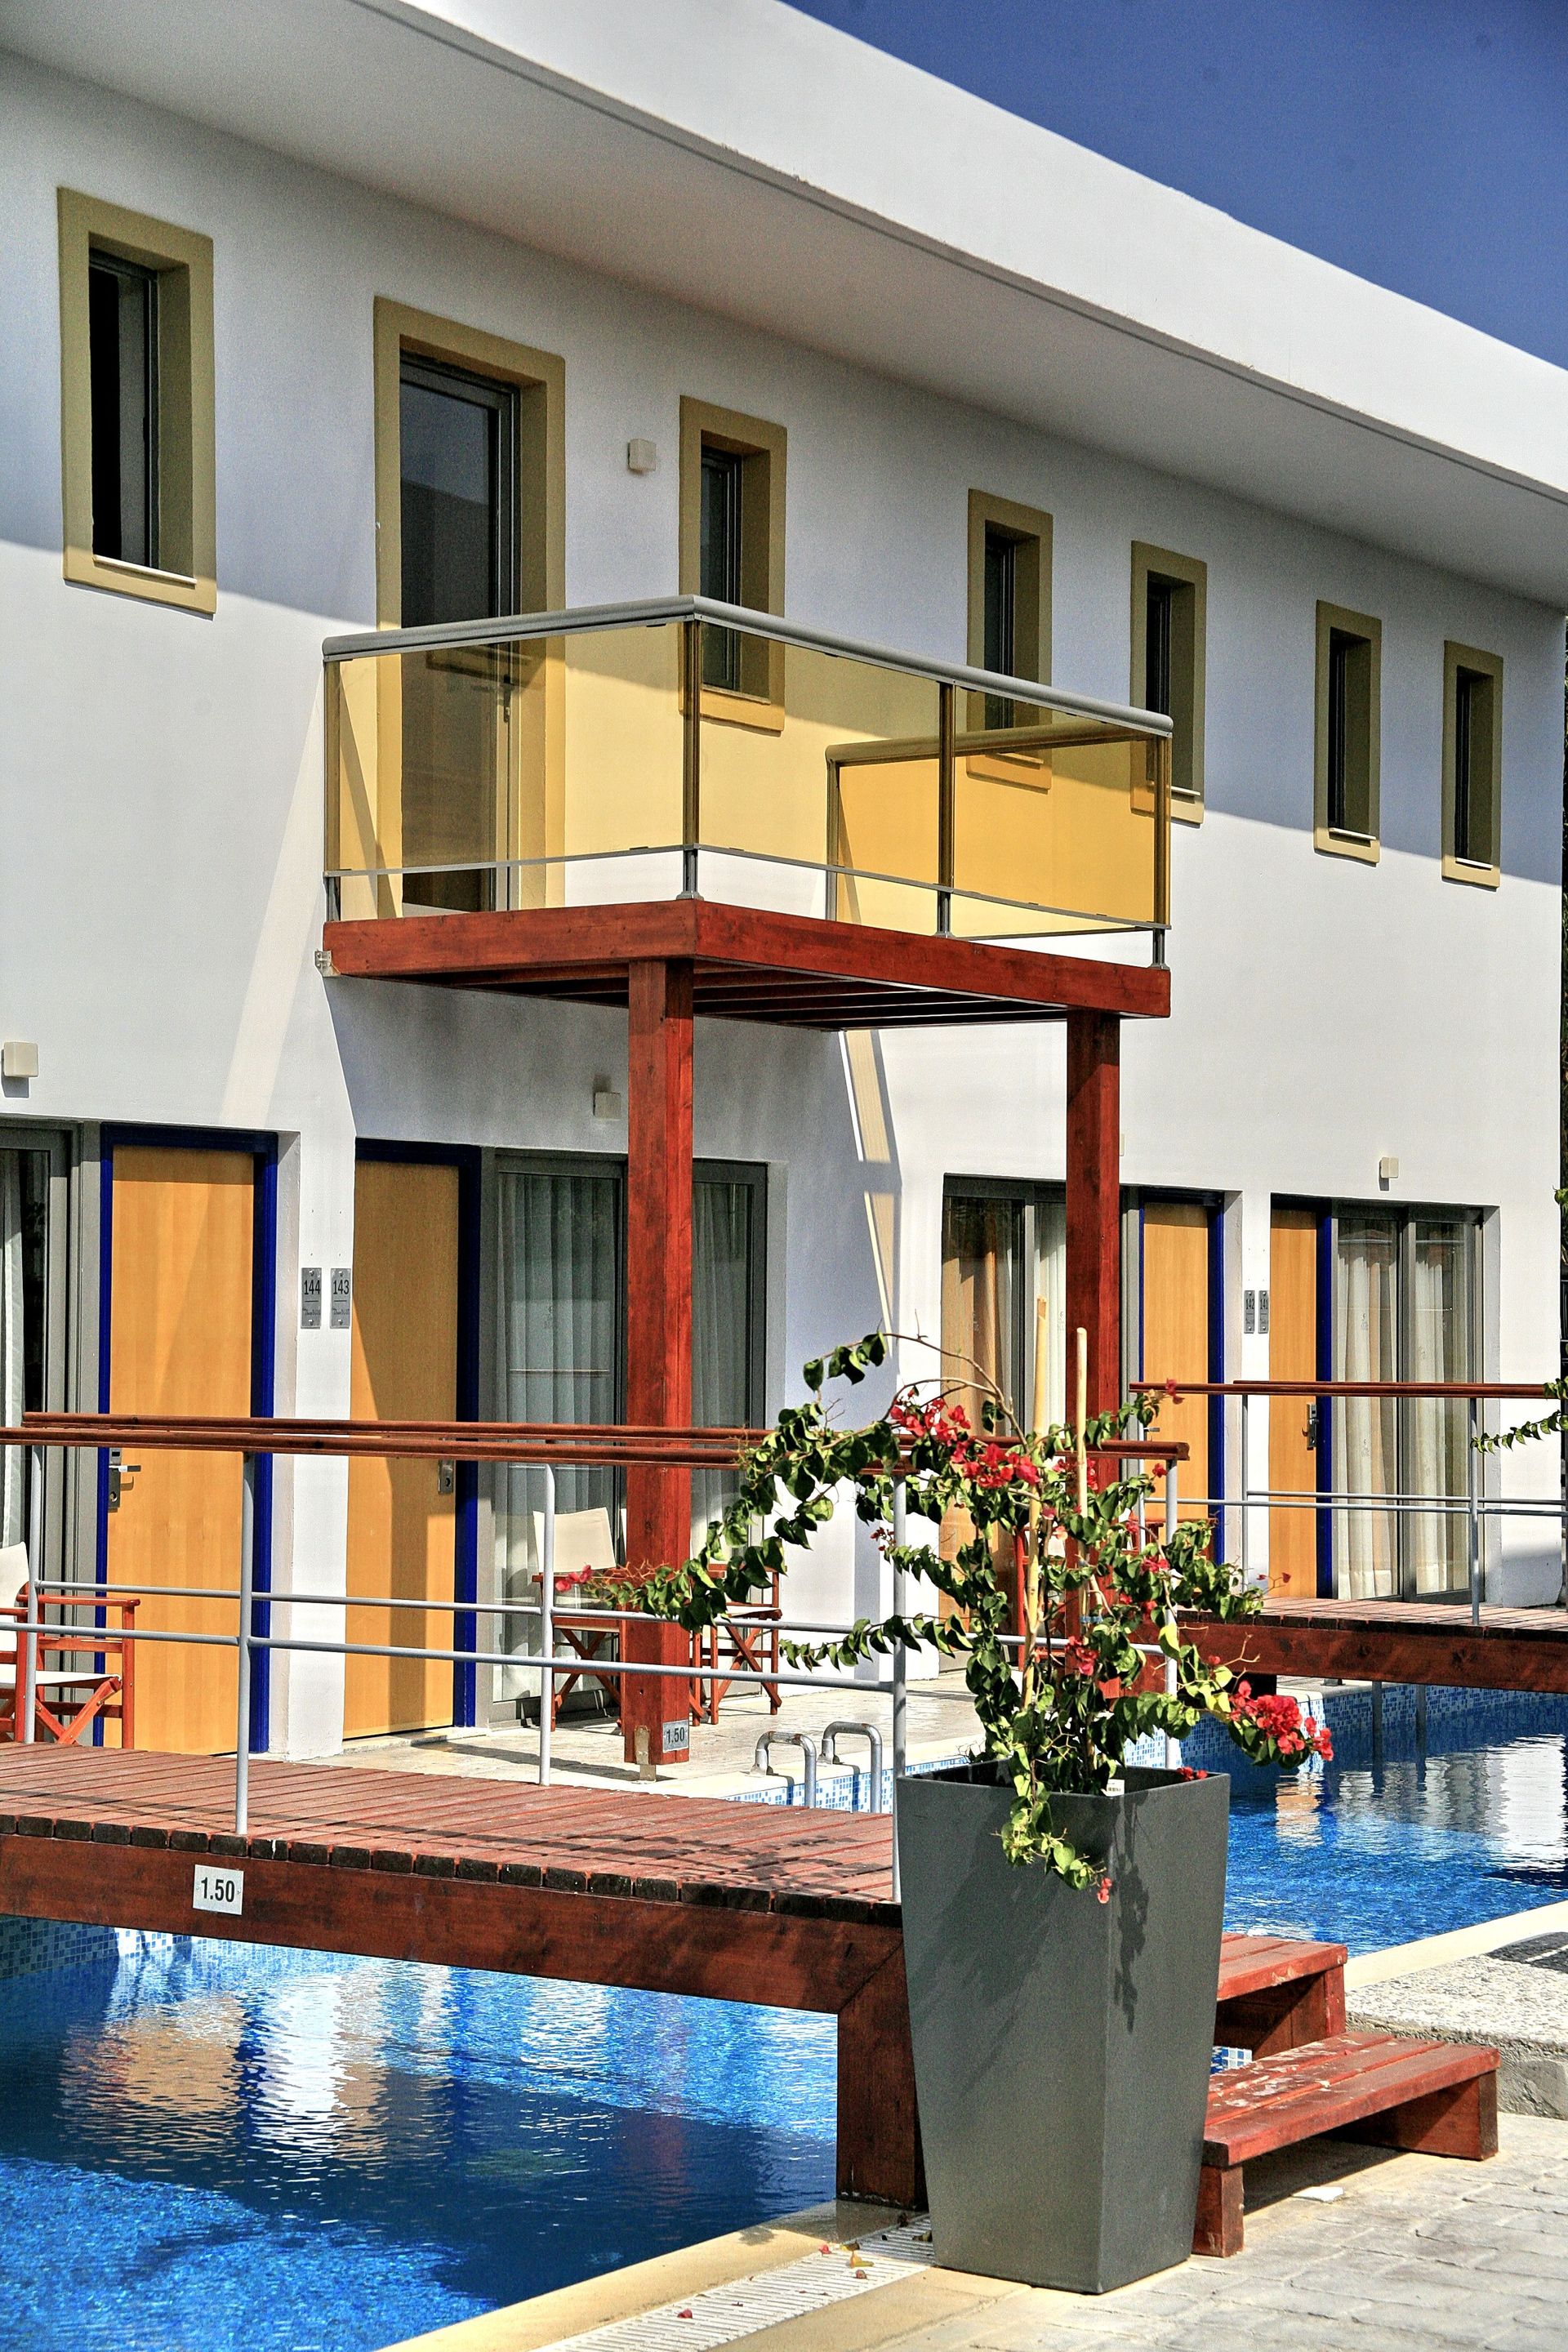 All Senses Ocean Blue Sea Side Resort - Évaluations de l'hôtel 4 étoiles à  Rhodes